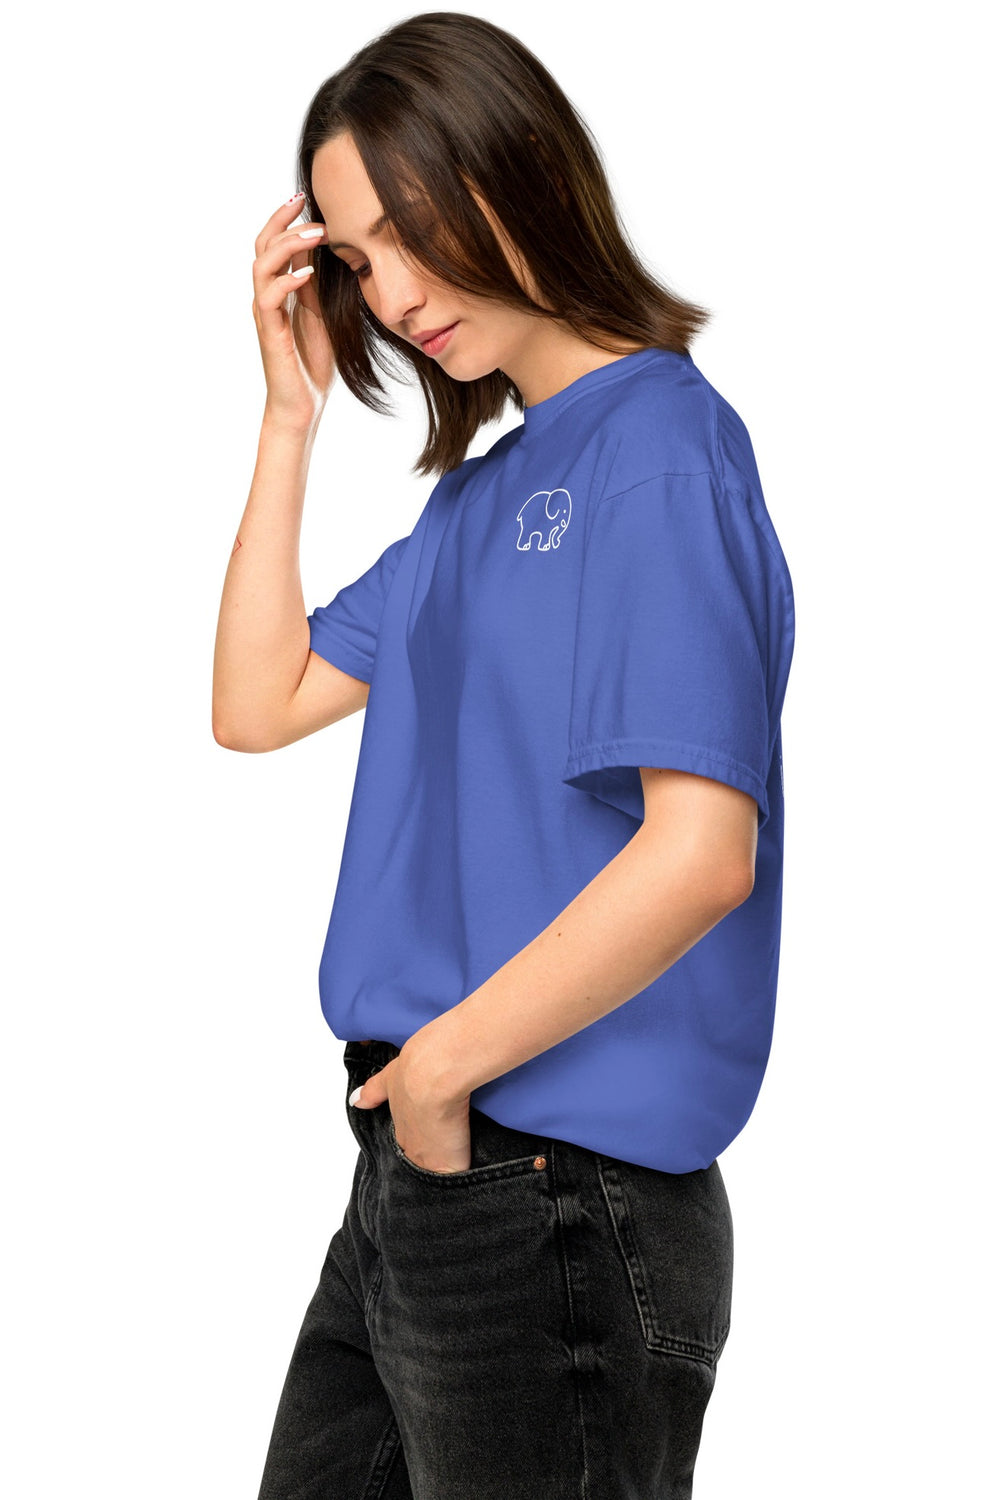 L.O.V.E Short Sleeve Unisex T-Shirt